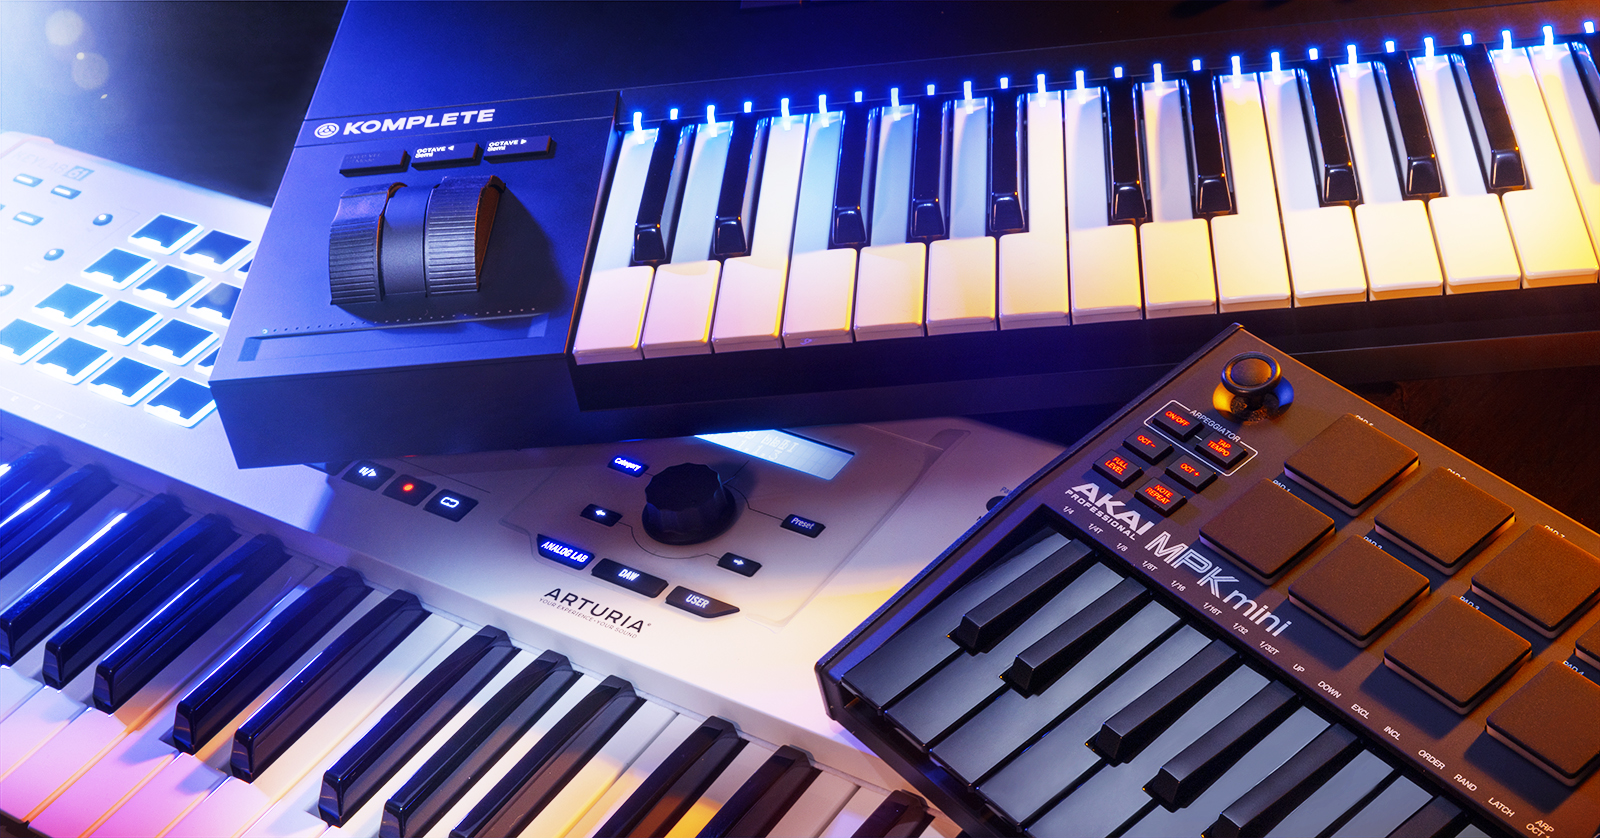 Musical Keyboard Professional Midi Controller Electronic Piano Music  Synthesizer Digital 61 Keys Organ Instruments